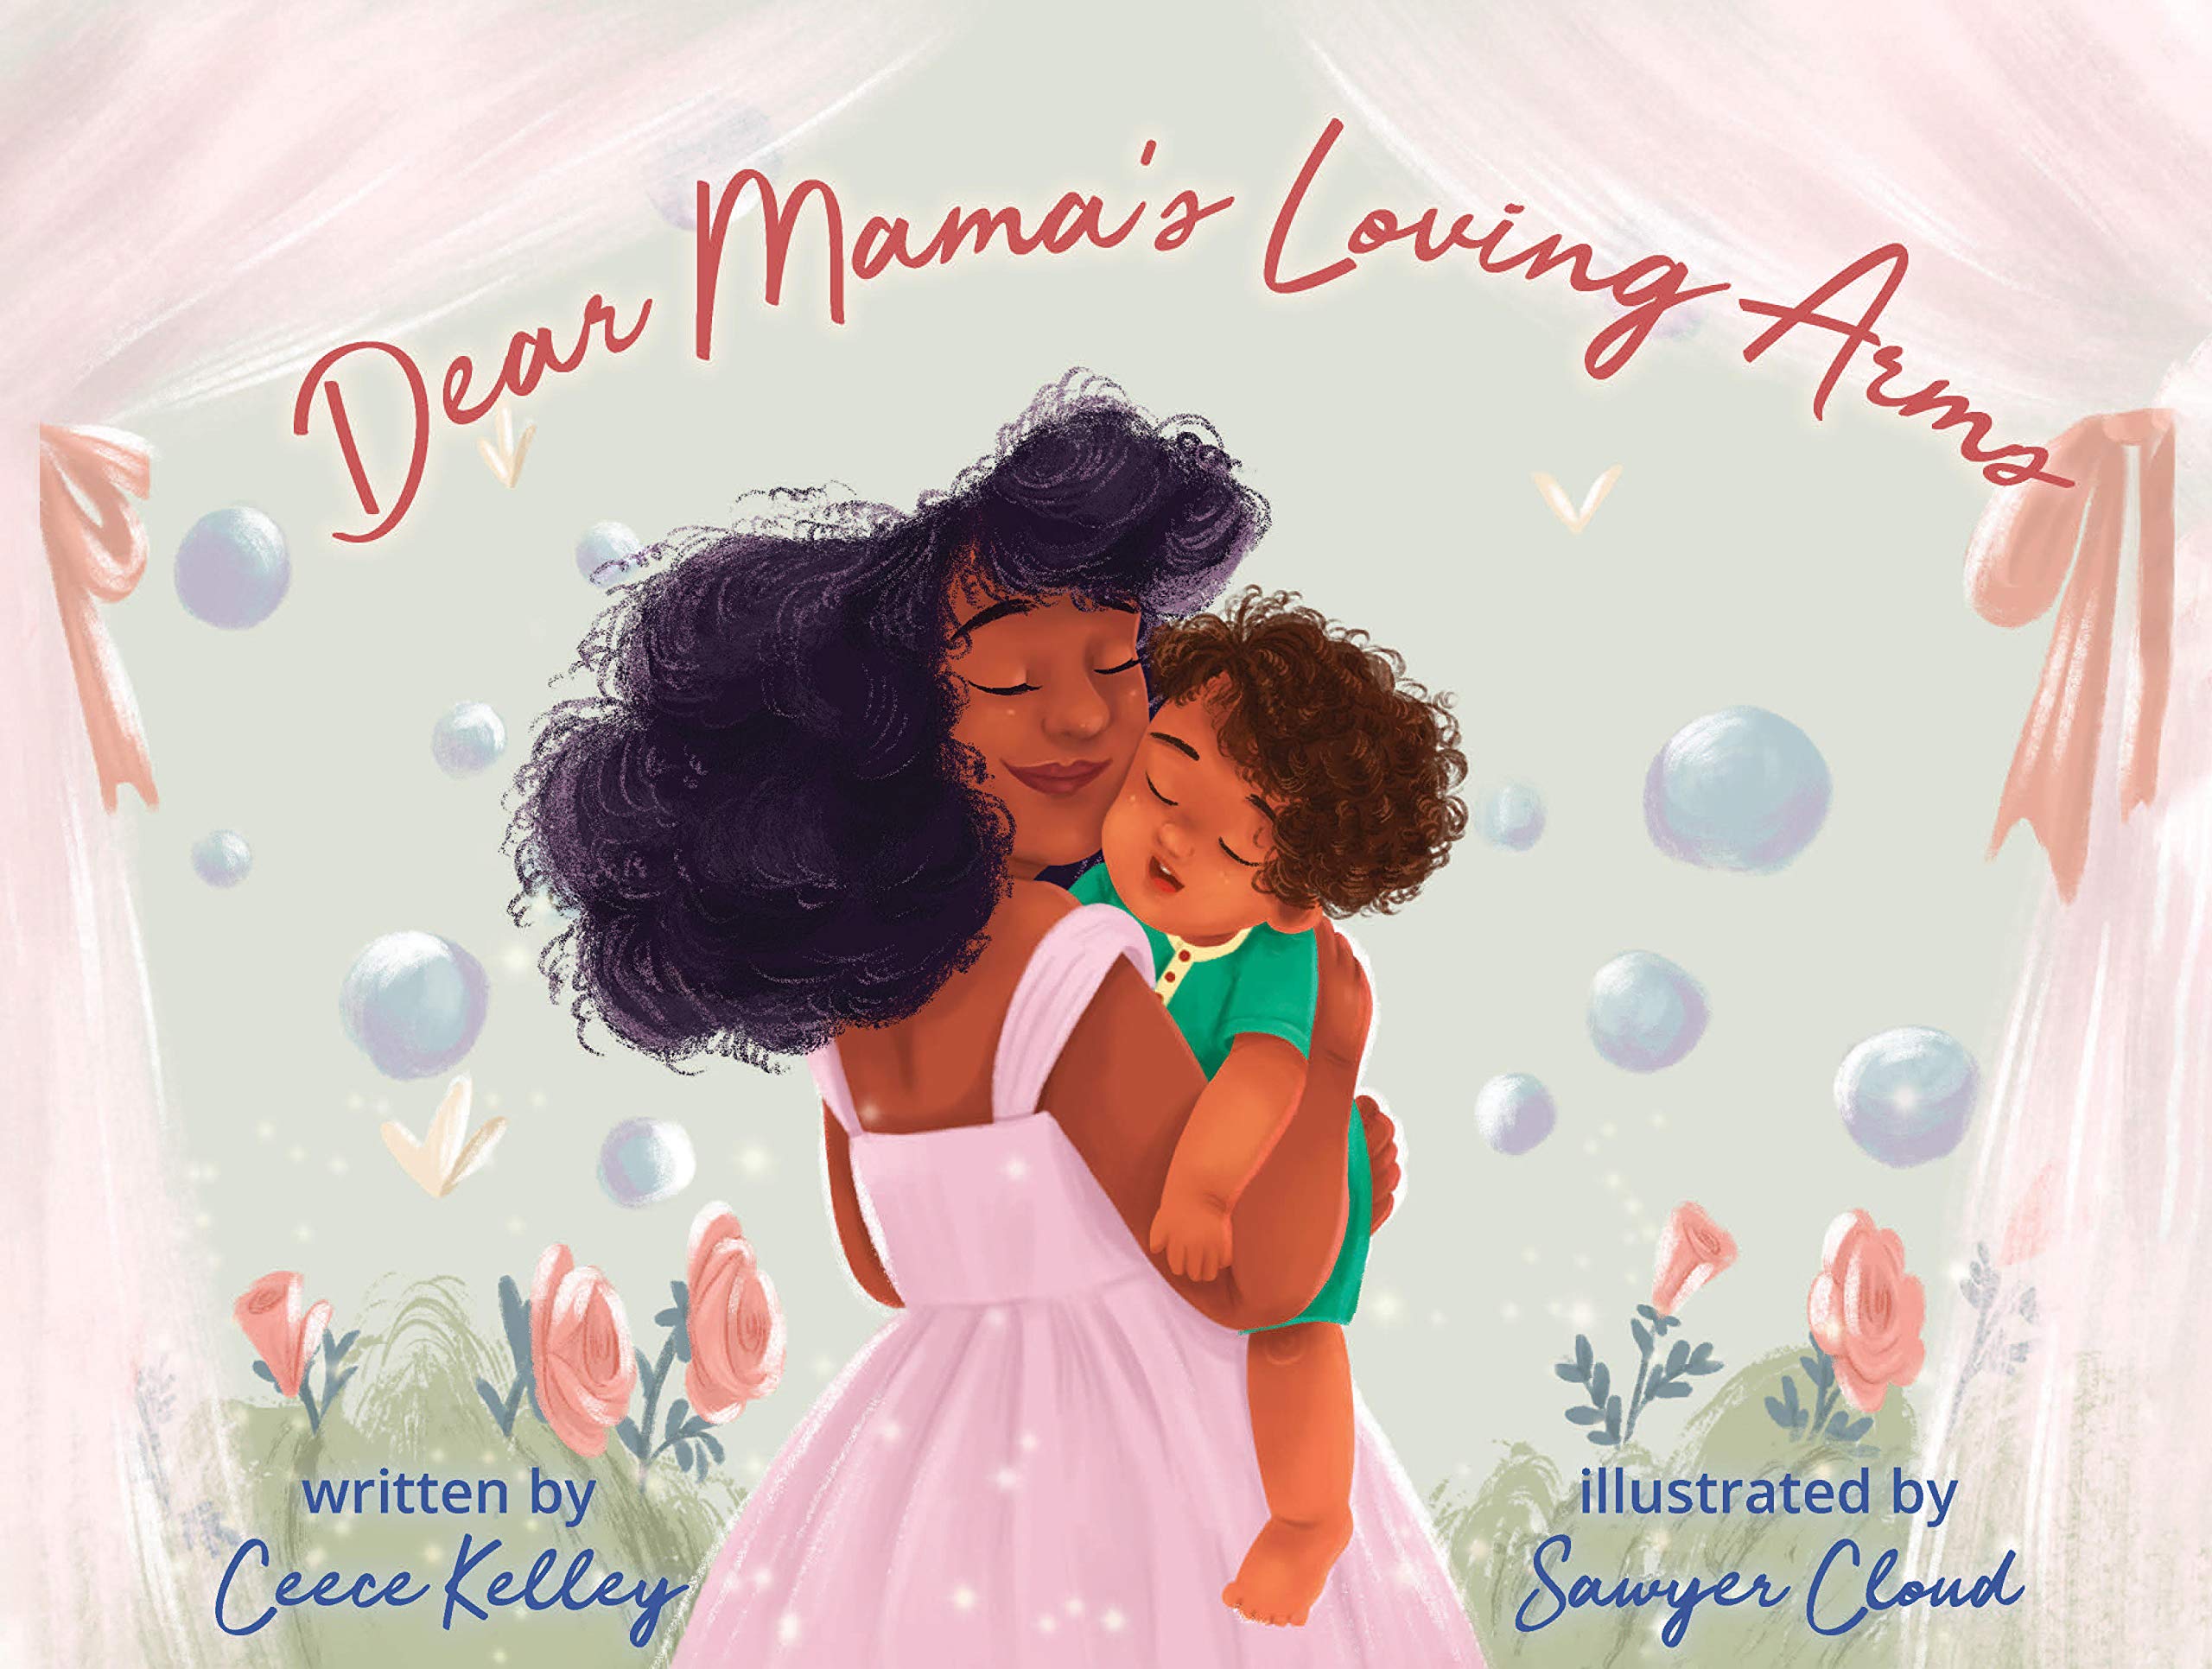 Dear Mama’s Loving Arms